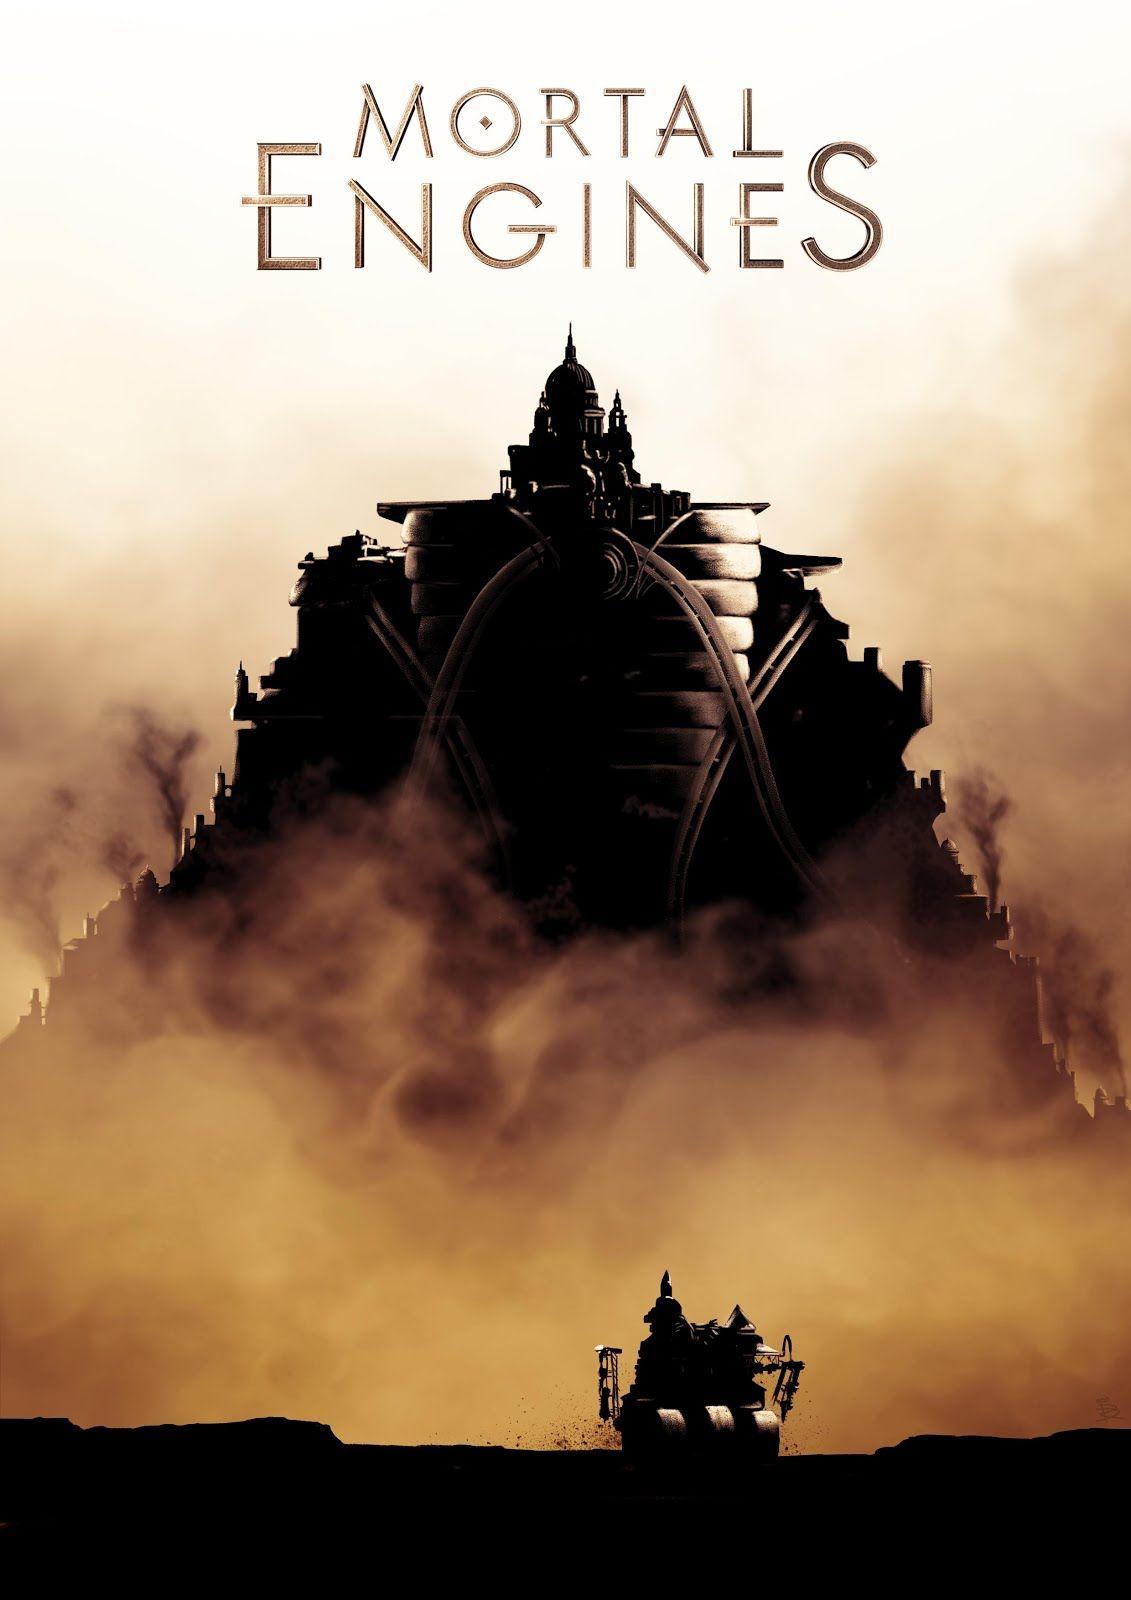 Mortal Engines (2018) Film: Full HD Movie Poster, Wallpaper, & Story Line Photo. Liste film, Film à voir, Image